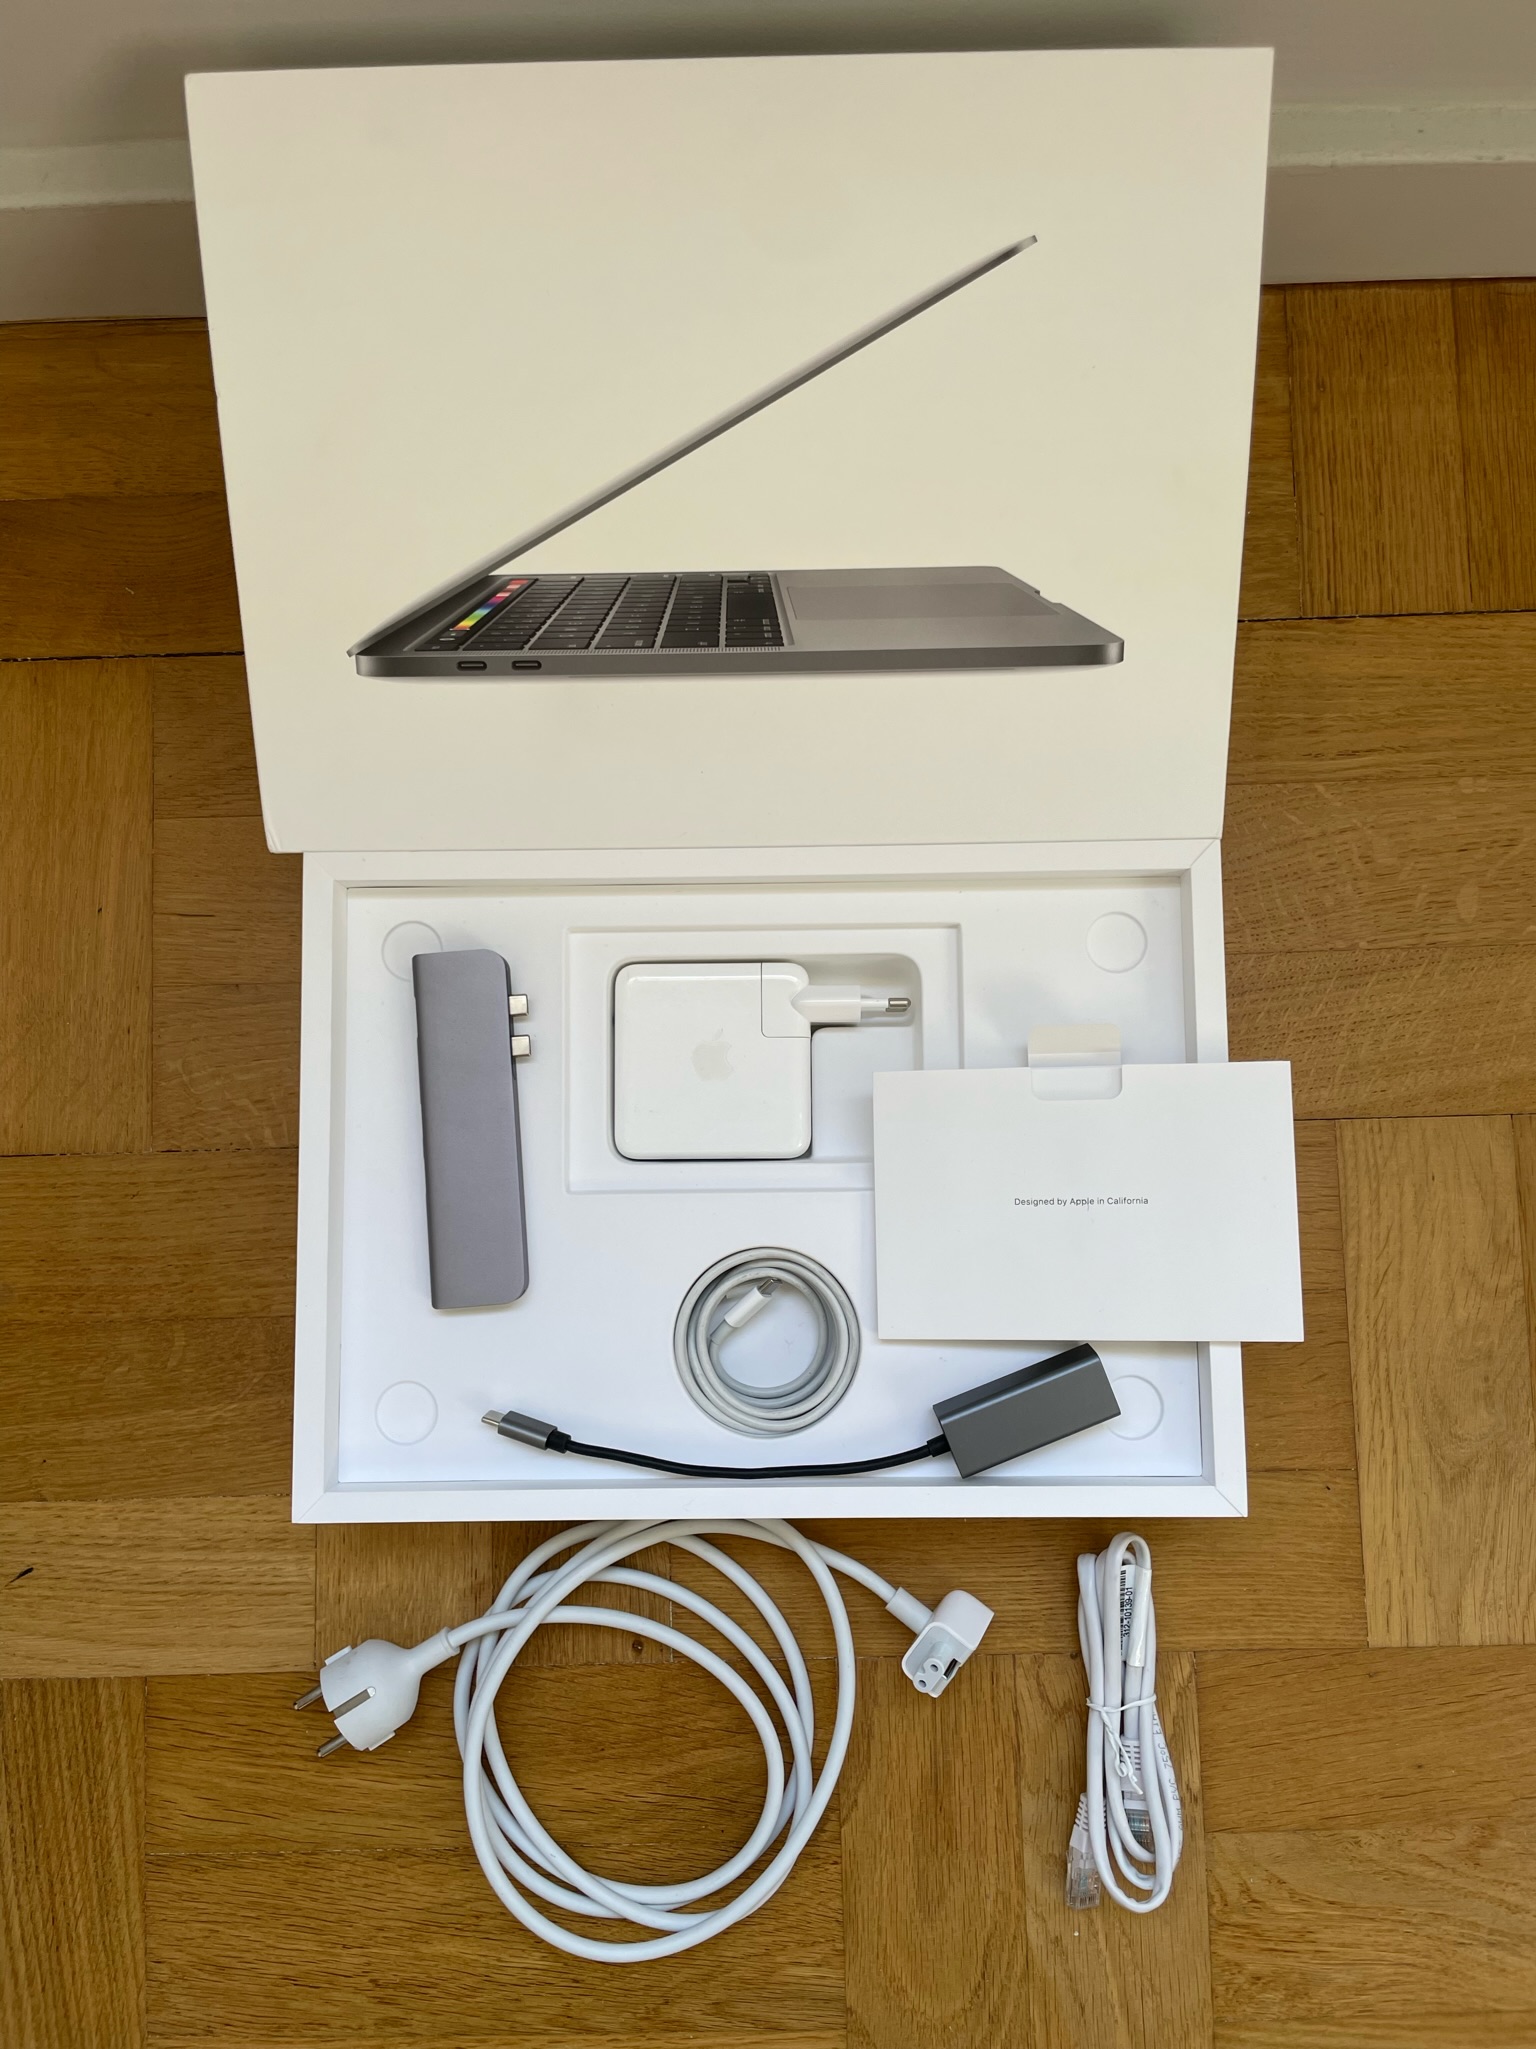 MacBook Pro 2020 i7 16go 512go + applecare 09/23